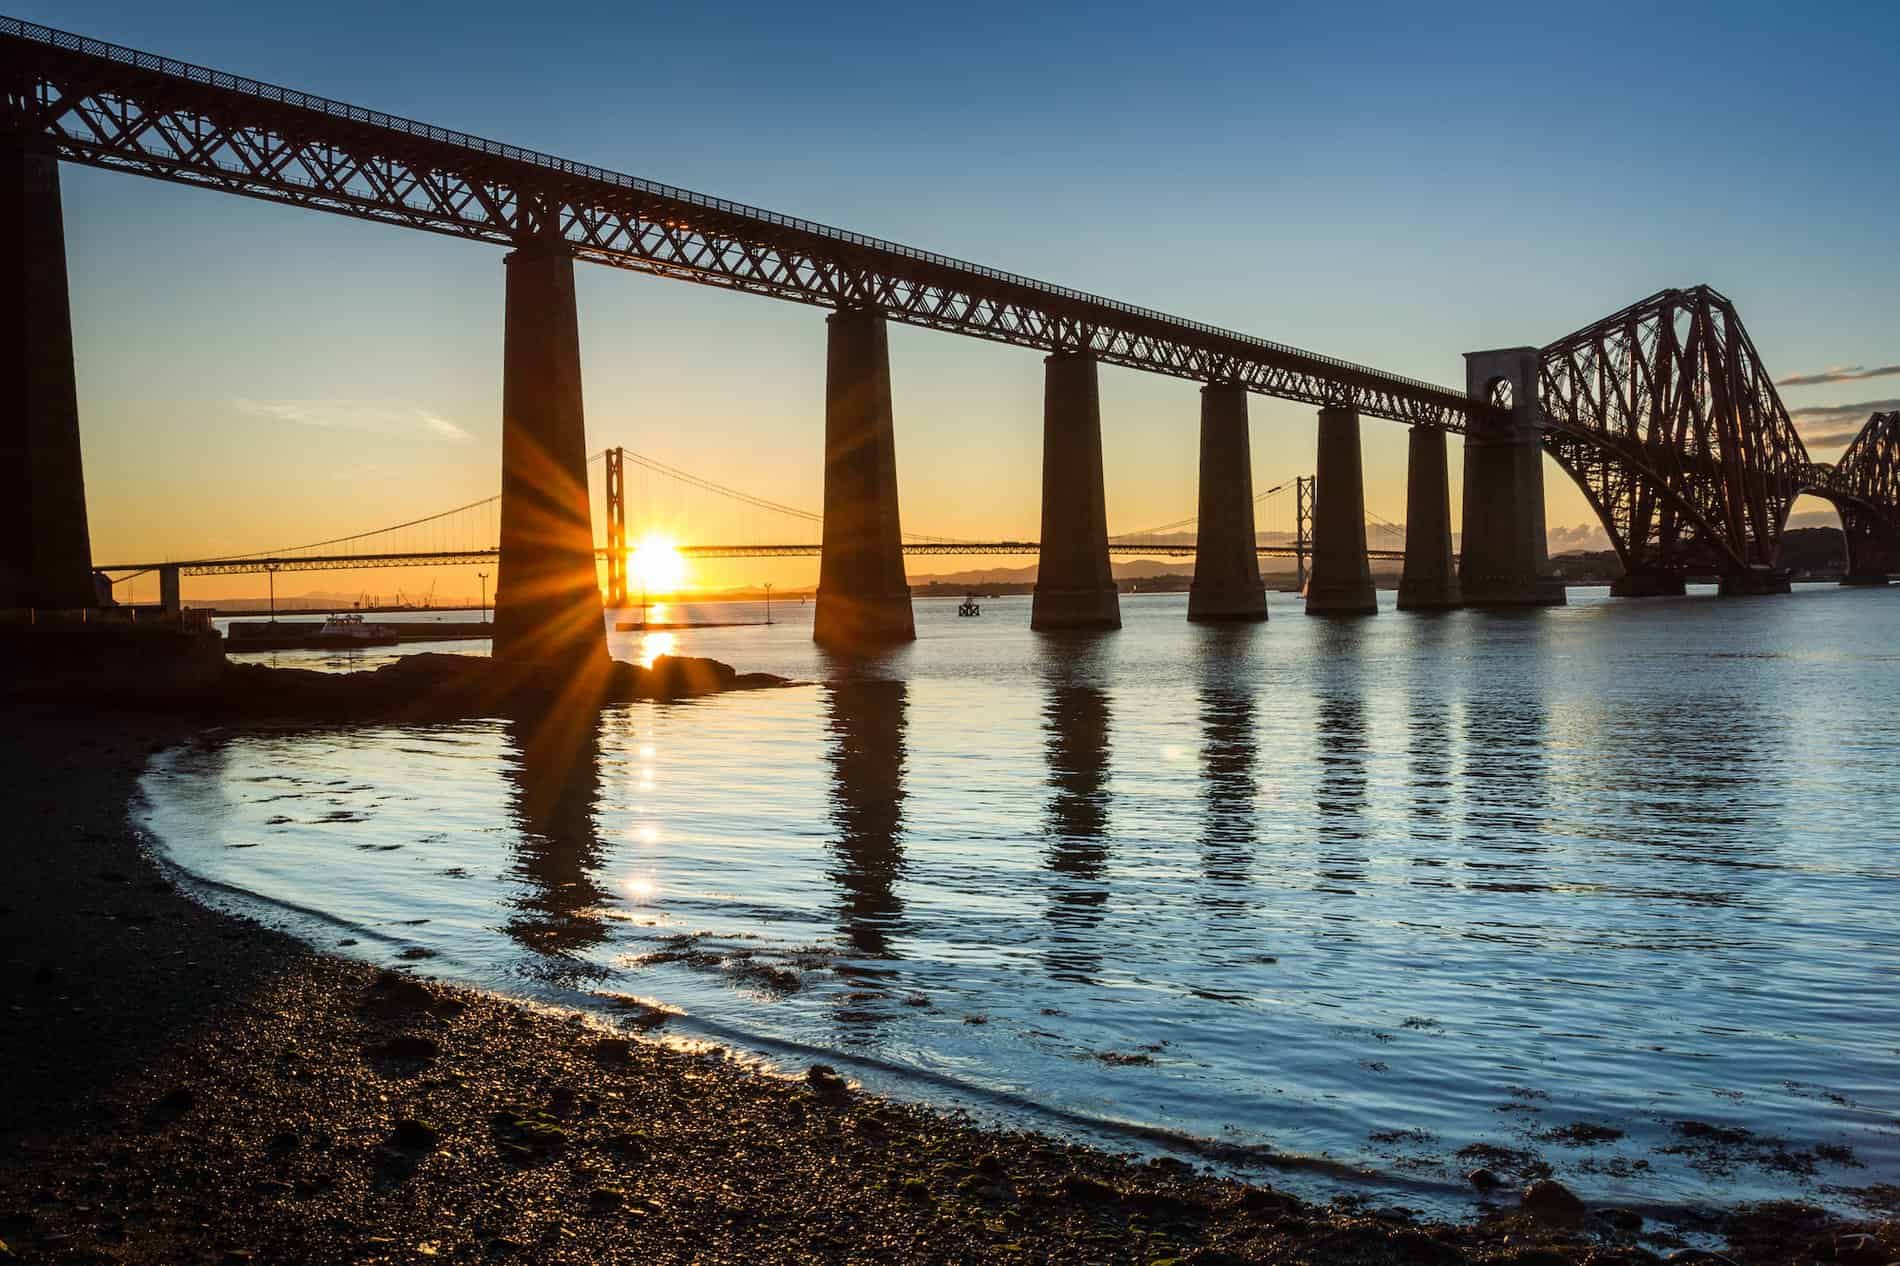 Sunset between the two bridges in Scotland